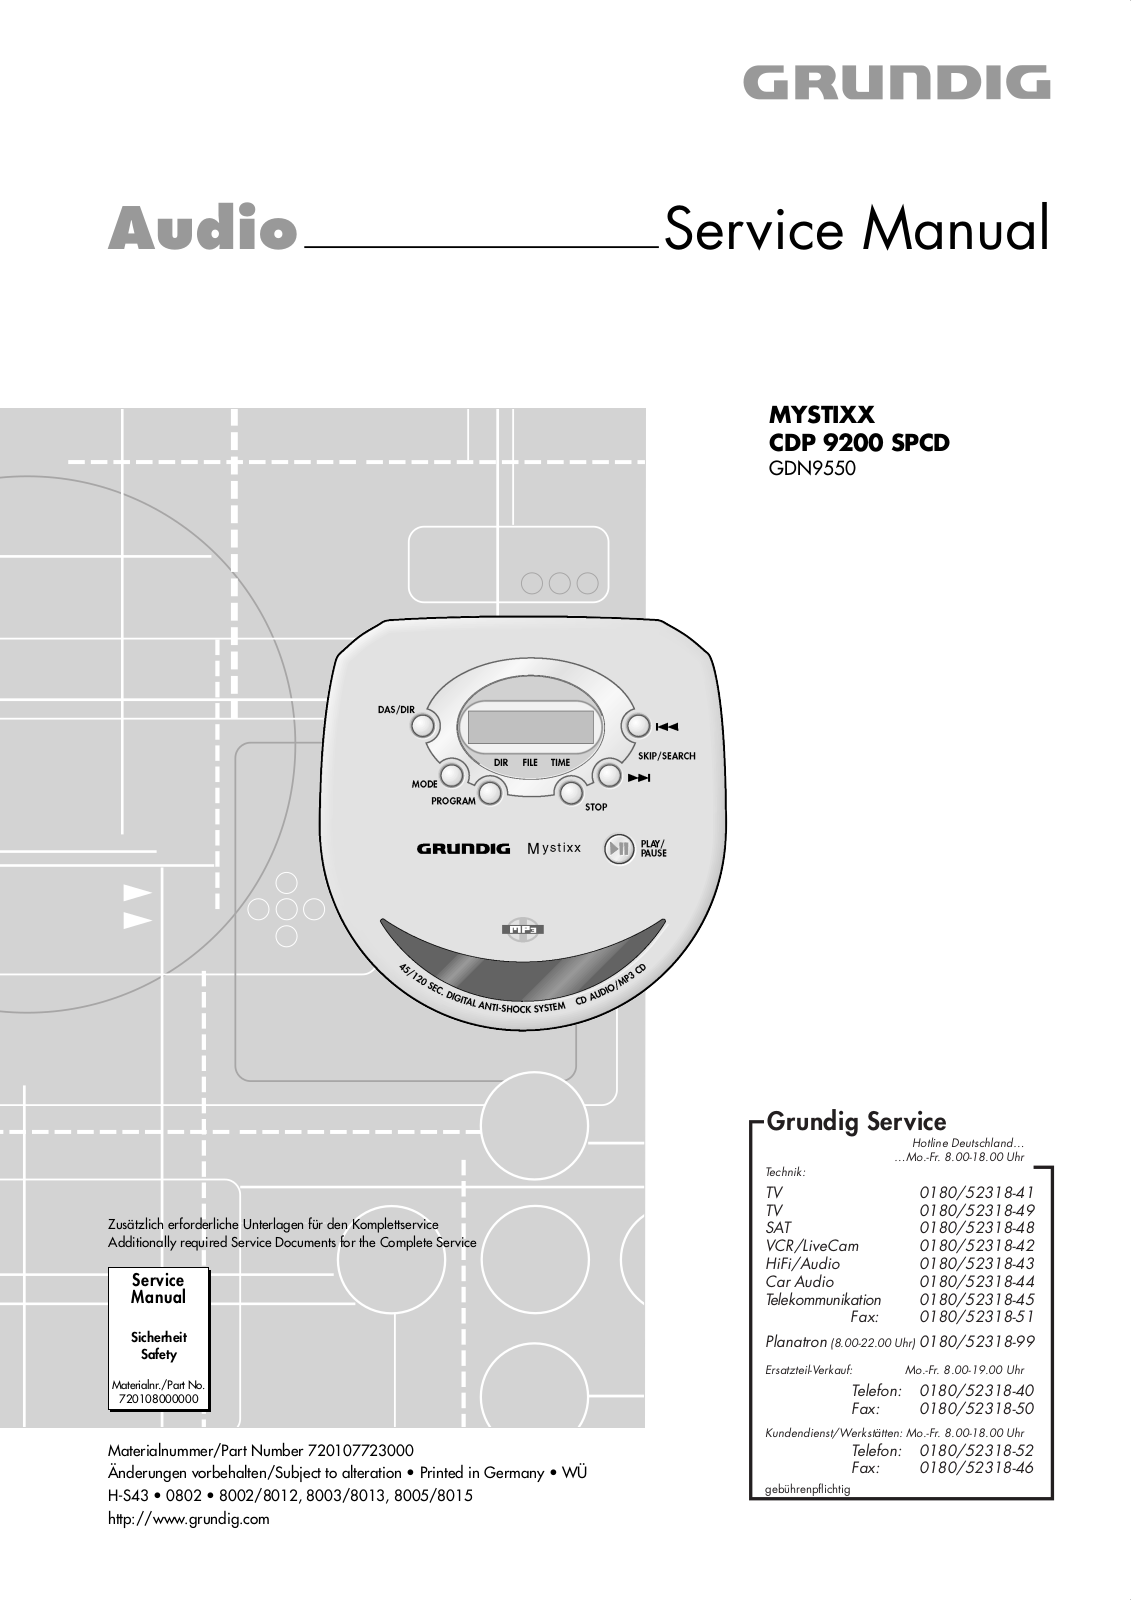 Grundig CDP-9200-SPCD Service Manual